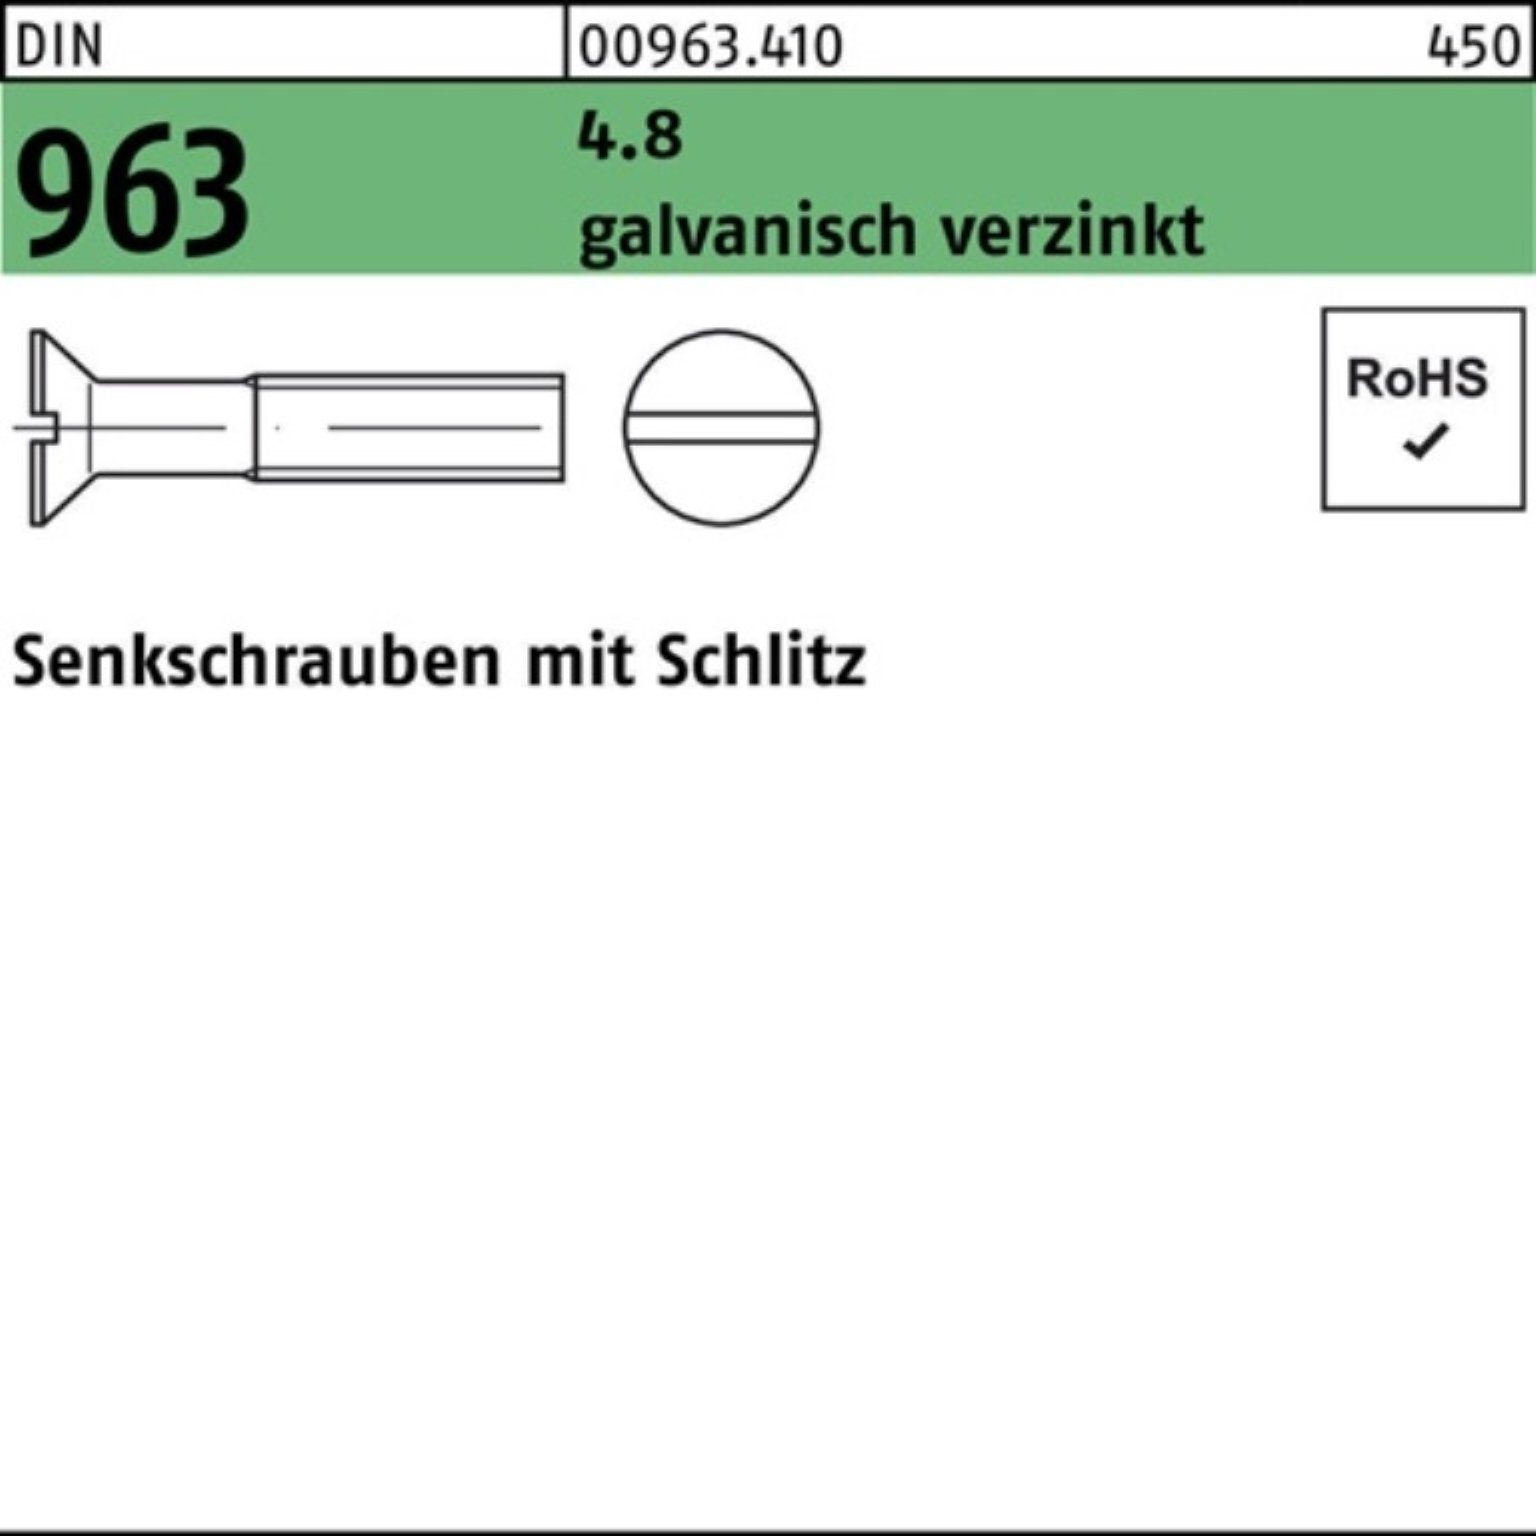 Reyher Senkschraube 200er Schlitz M6x Stü 963 40 4.8 DIN 200 galv.verz. Pack Senkschraube